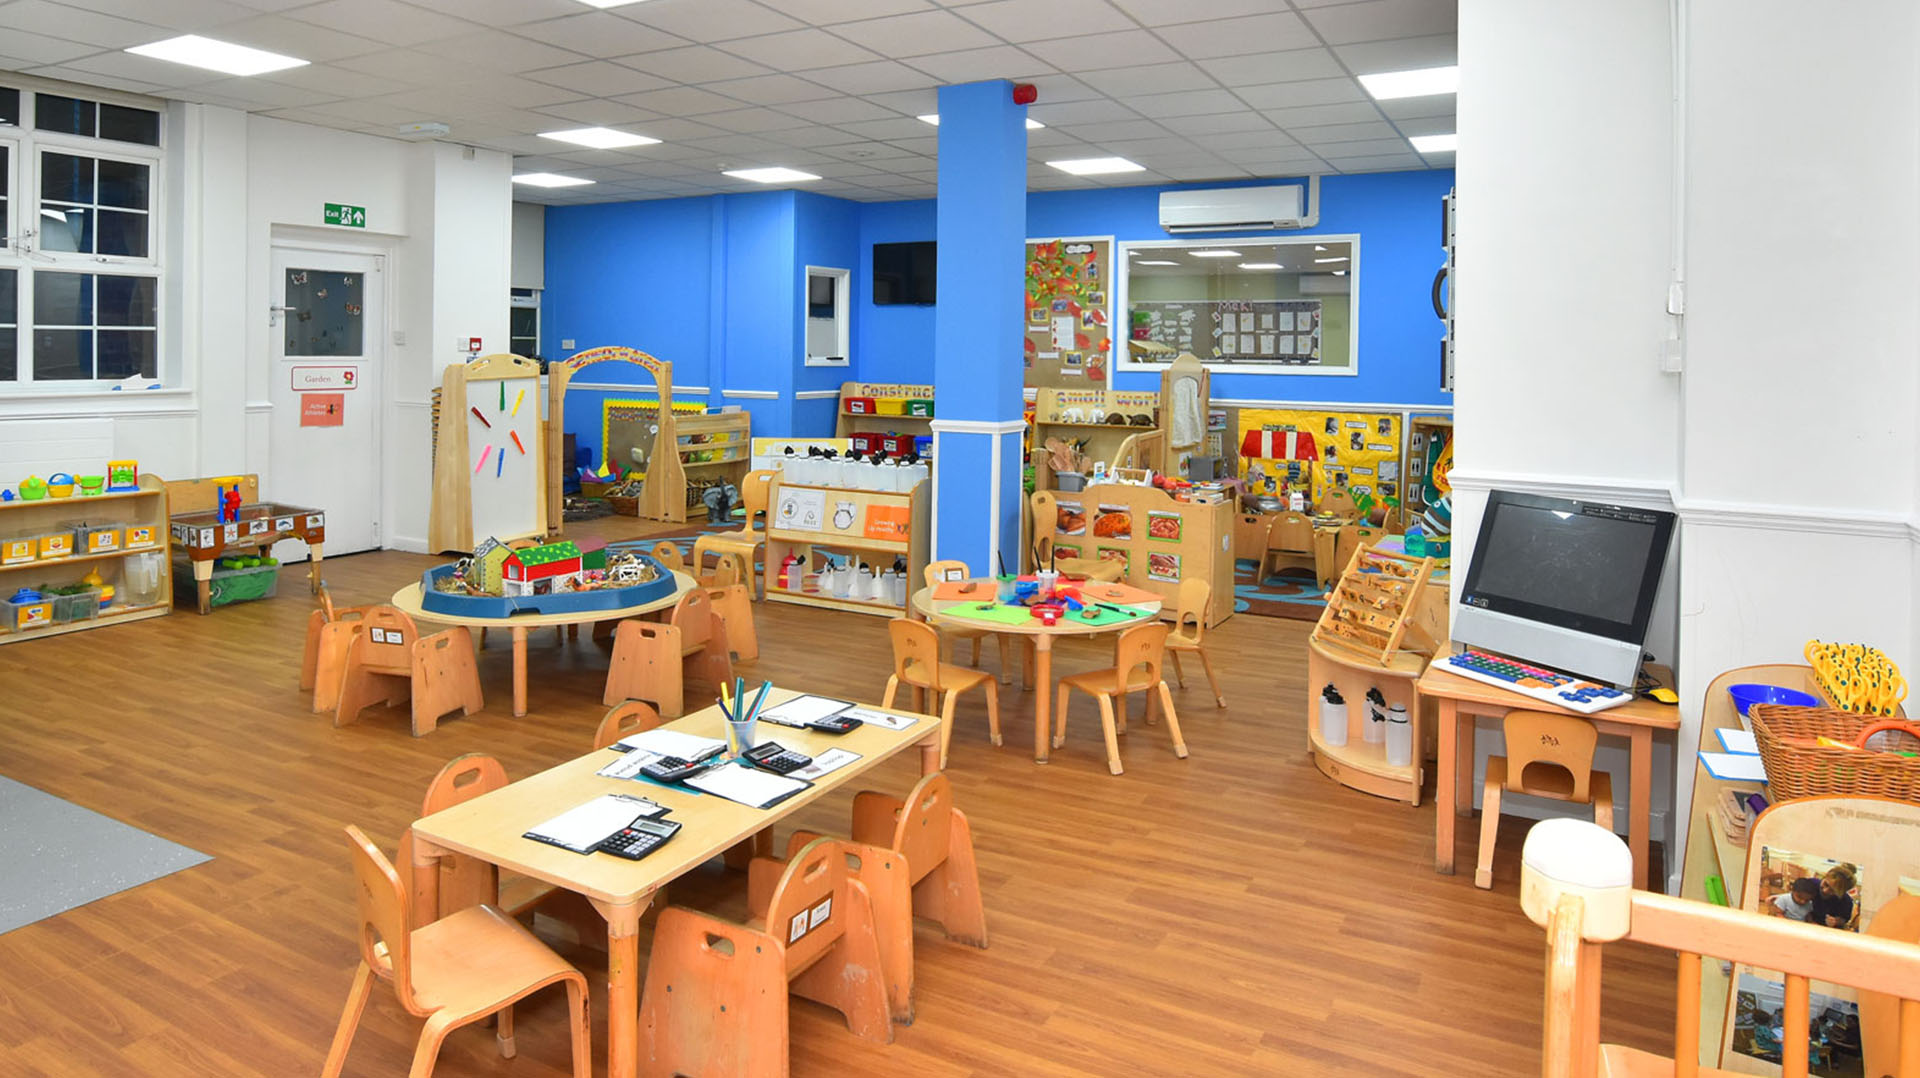 Hounslow Day Nursery and Preschool